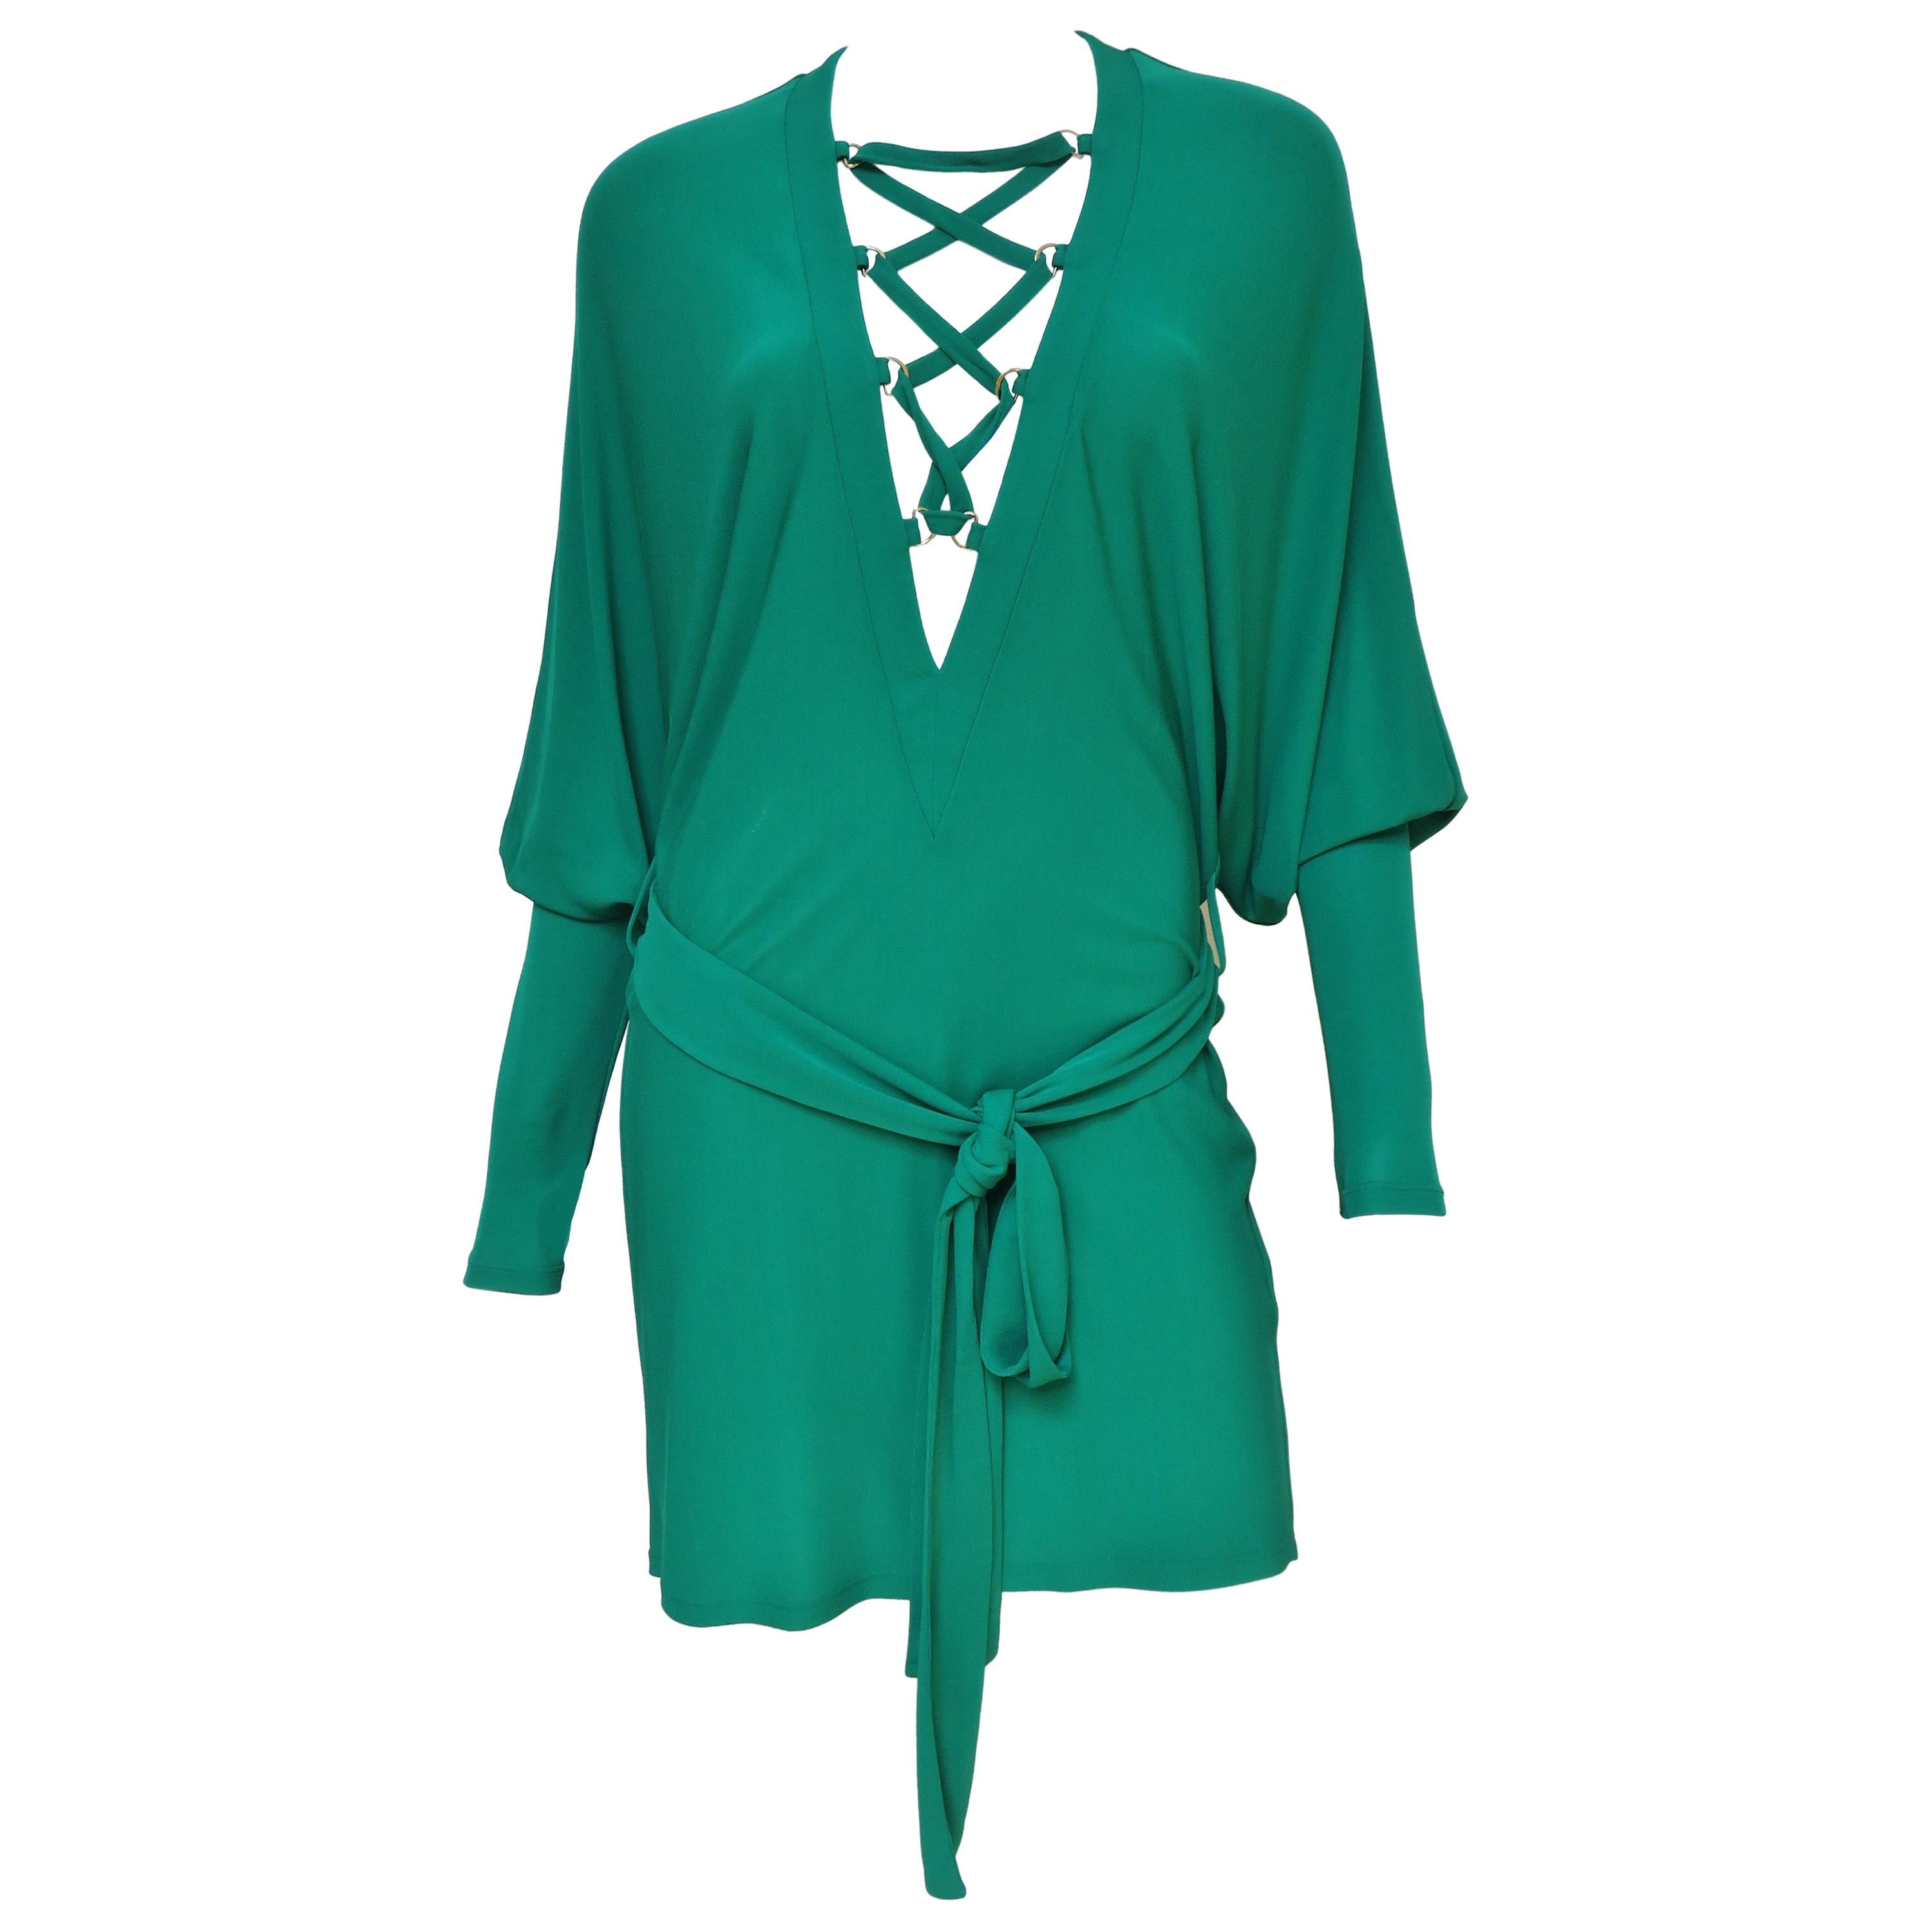 Balmain Emerald Green Lace up Plunge Dress